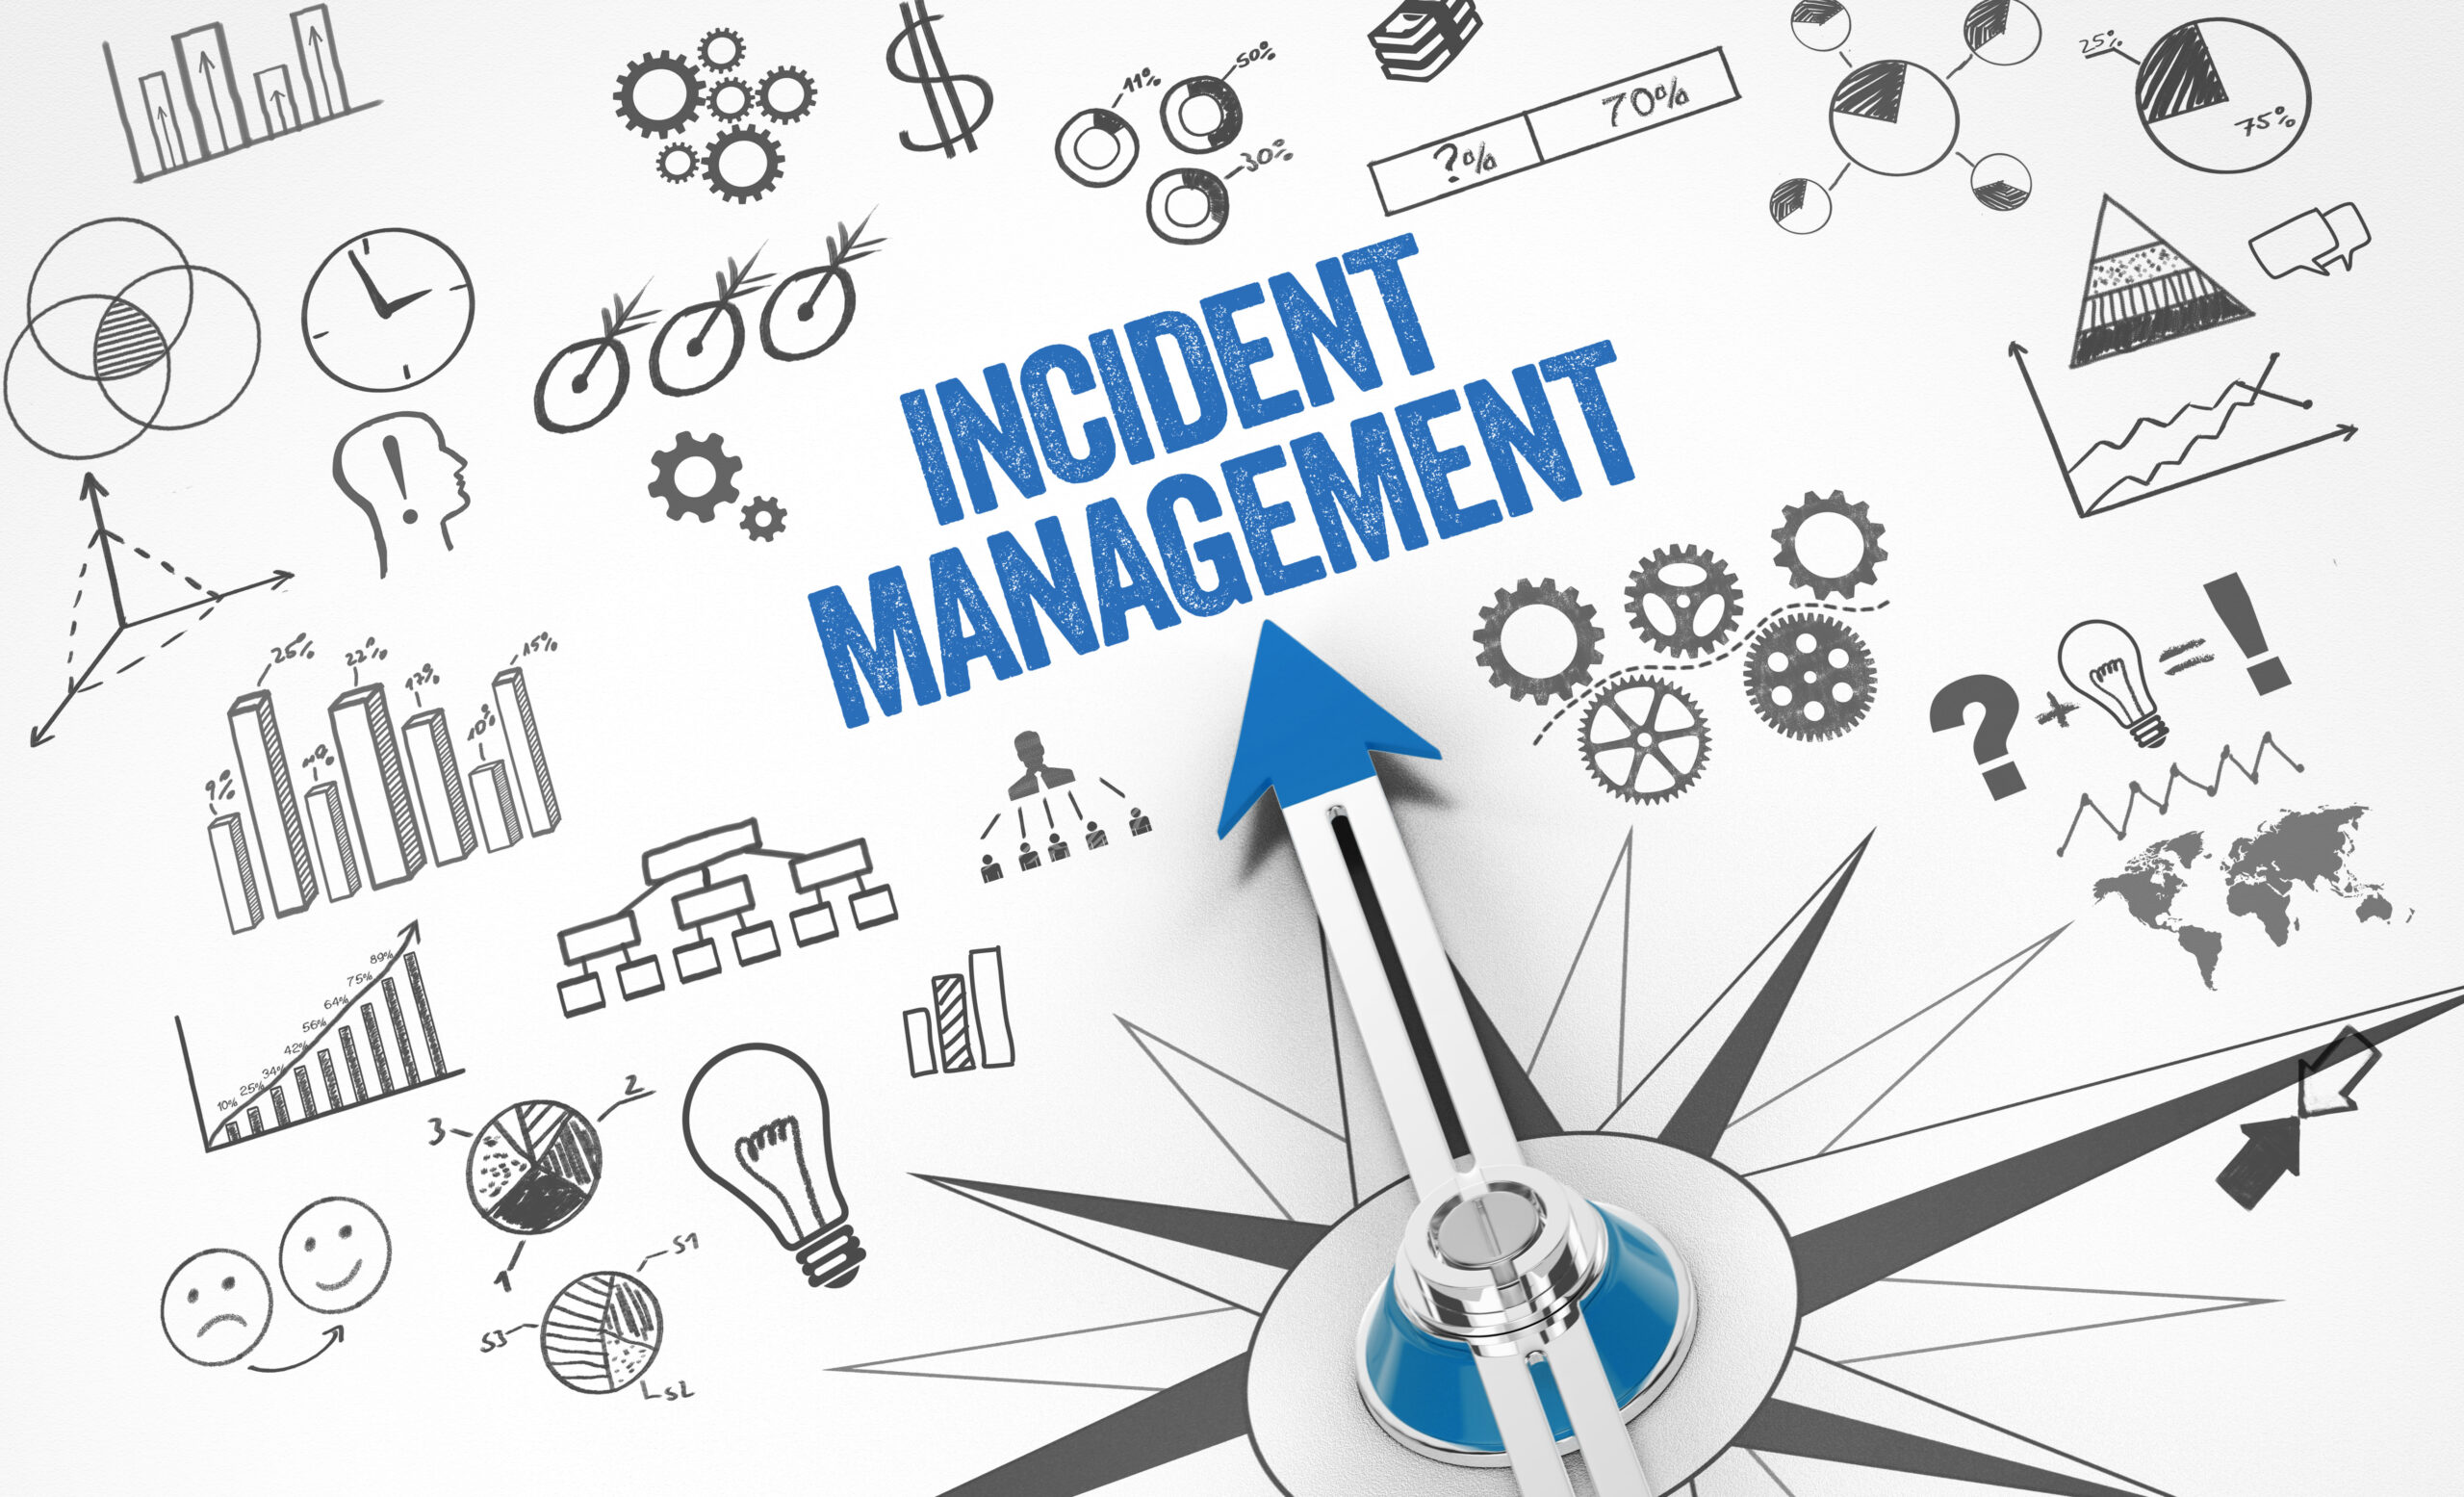 Incident response management